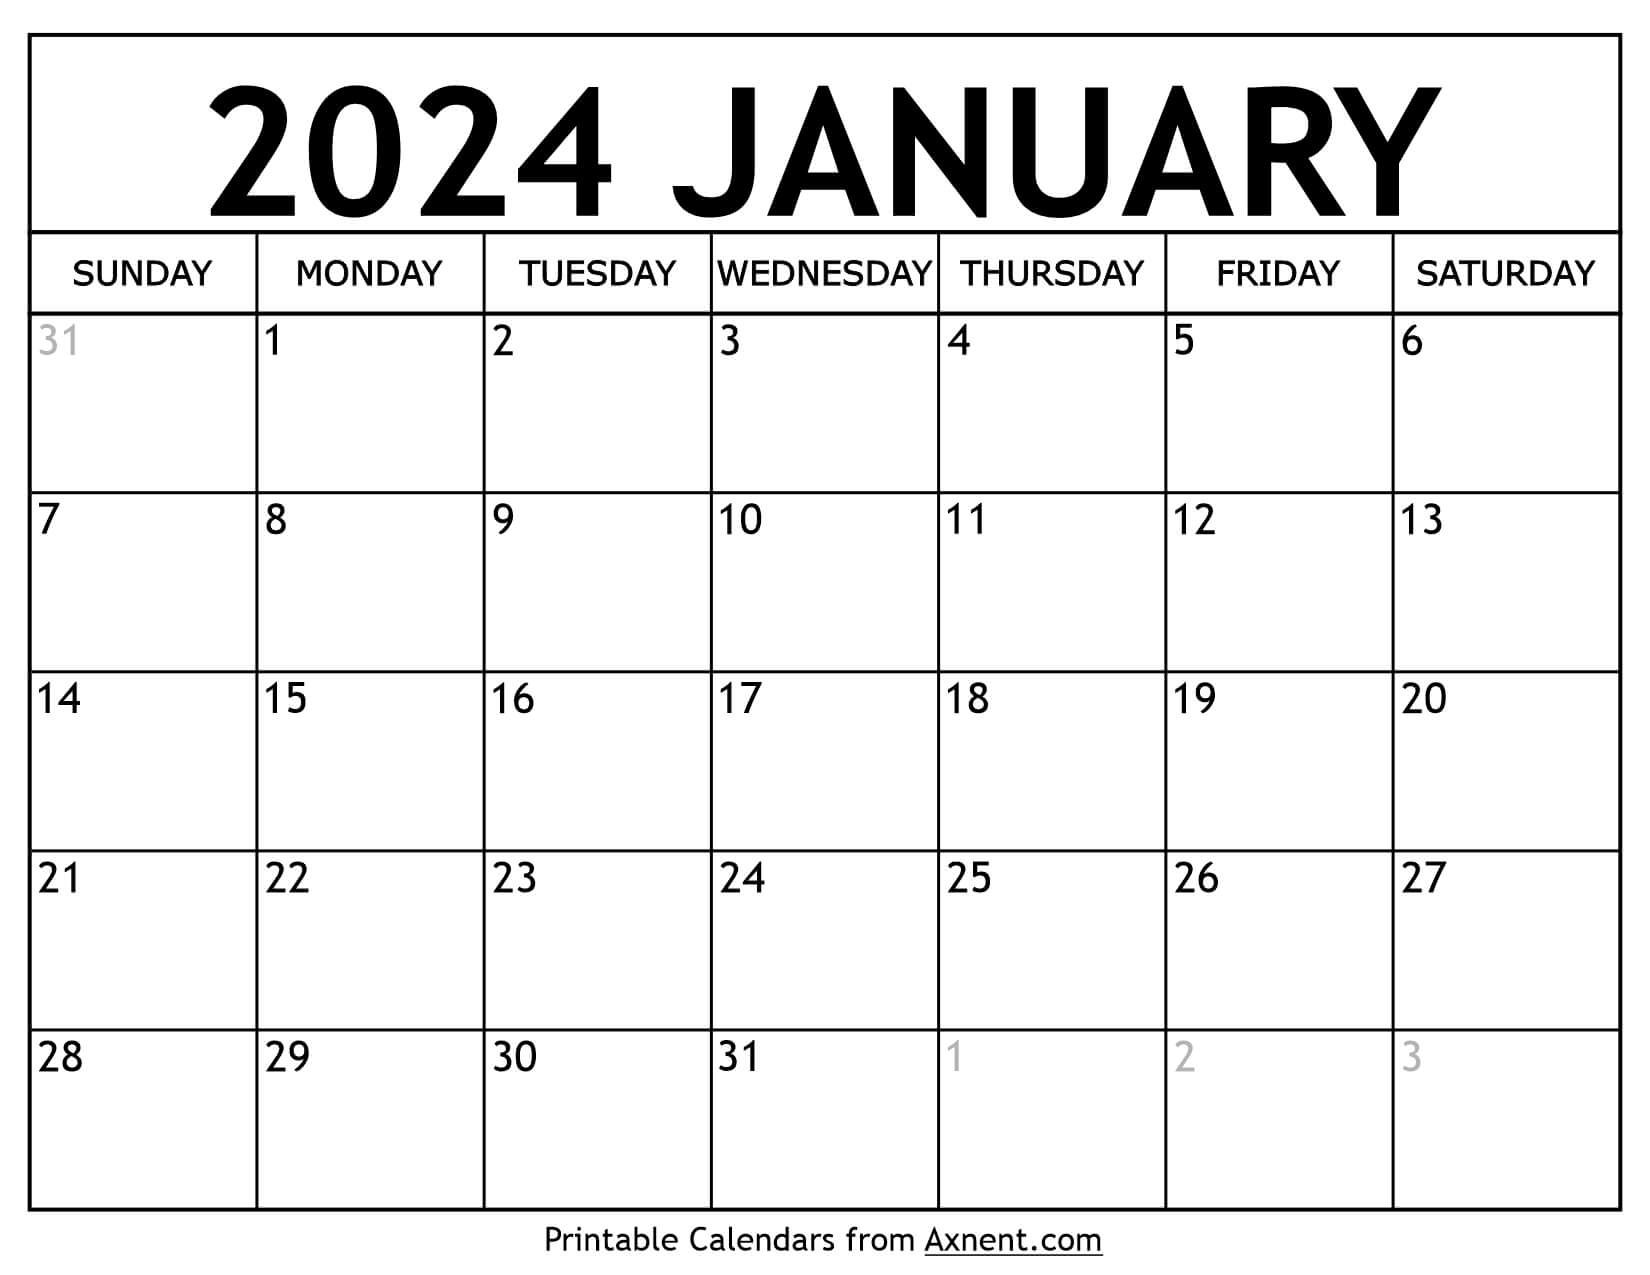 Printable January 2024 Calendar Template - Print Now for Free January Calendar 2024 Printable